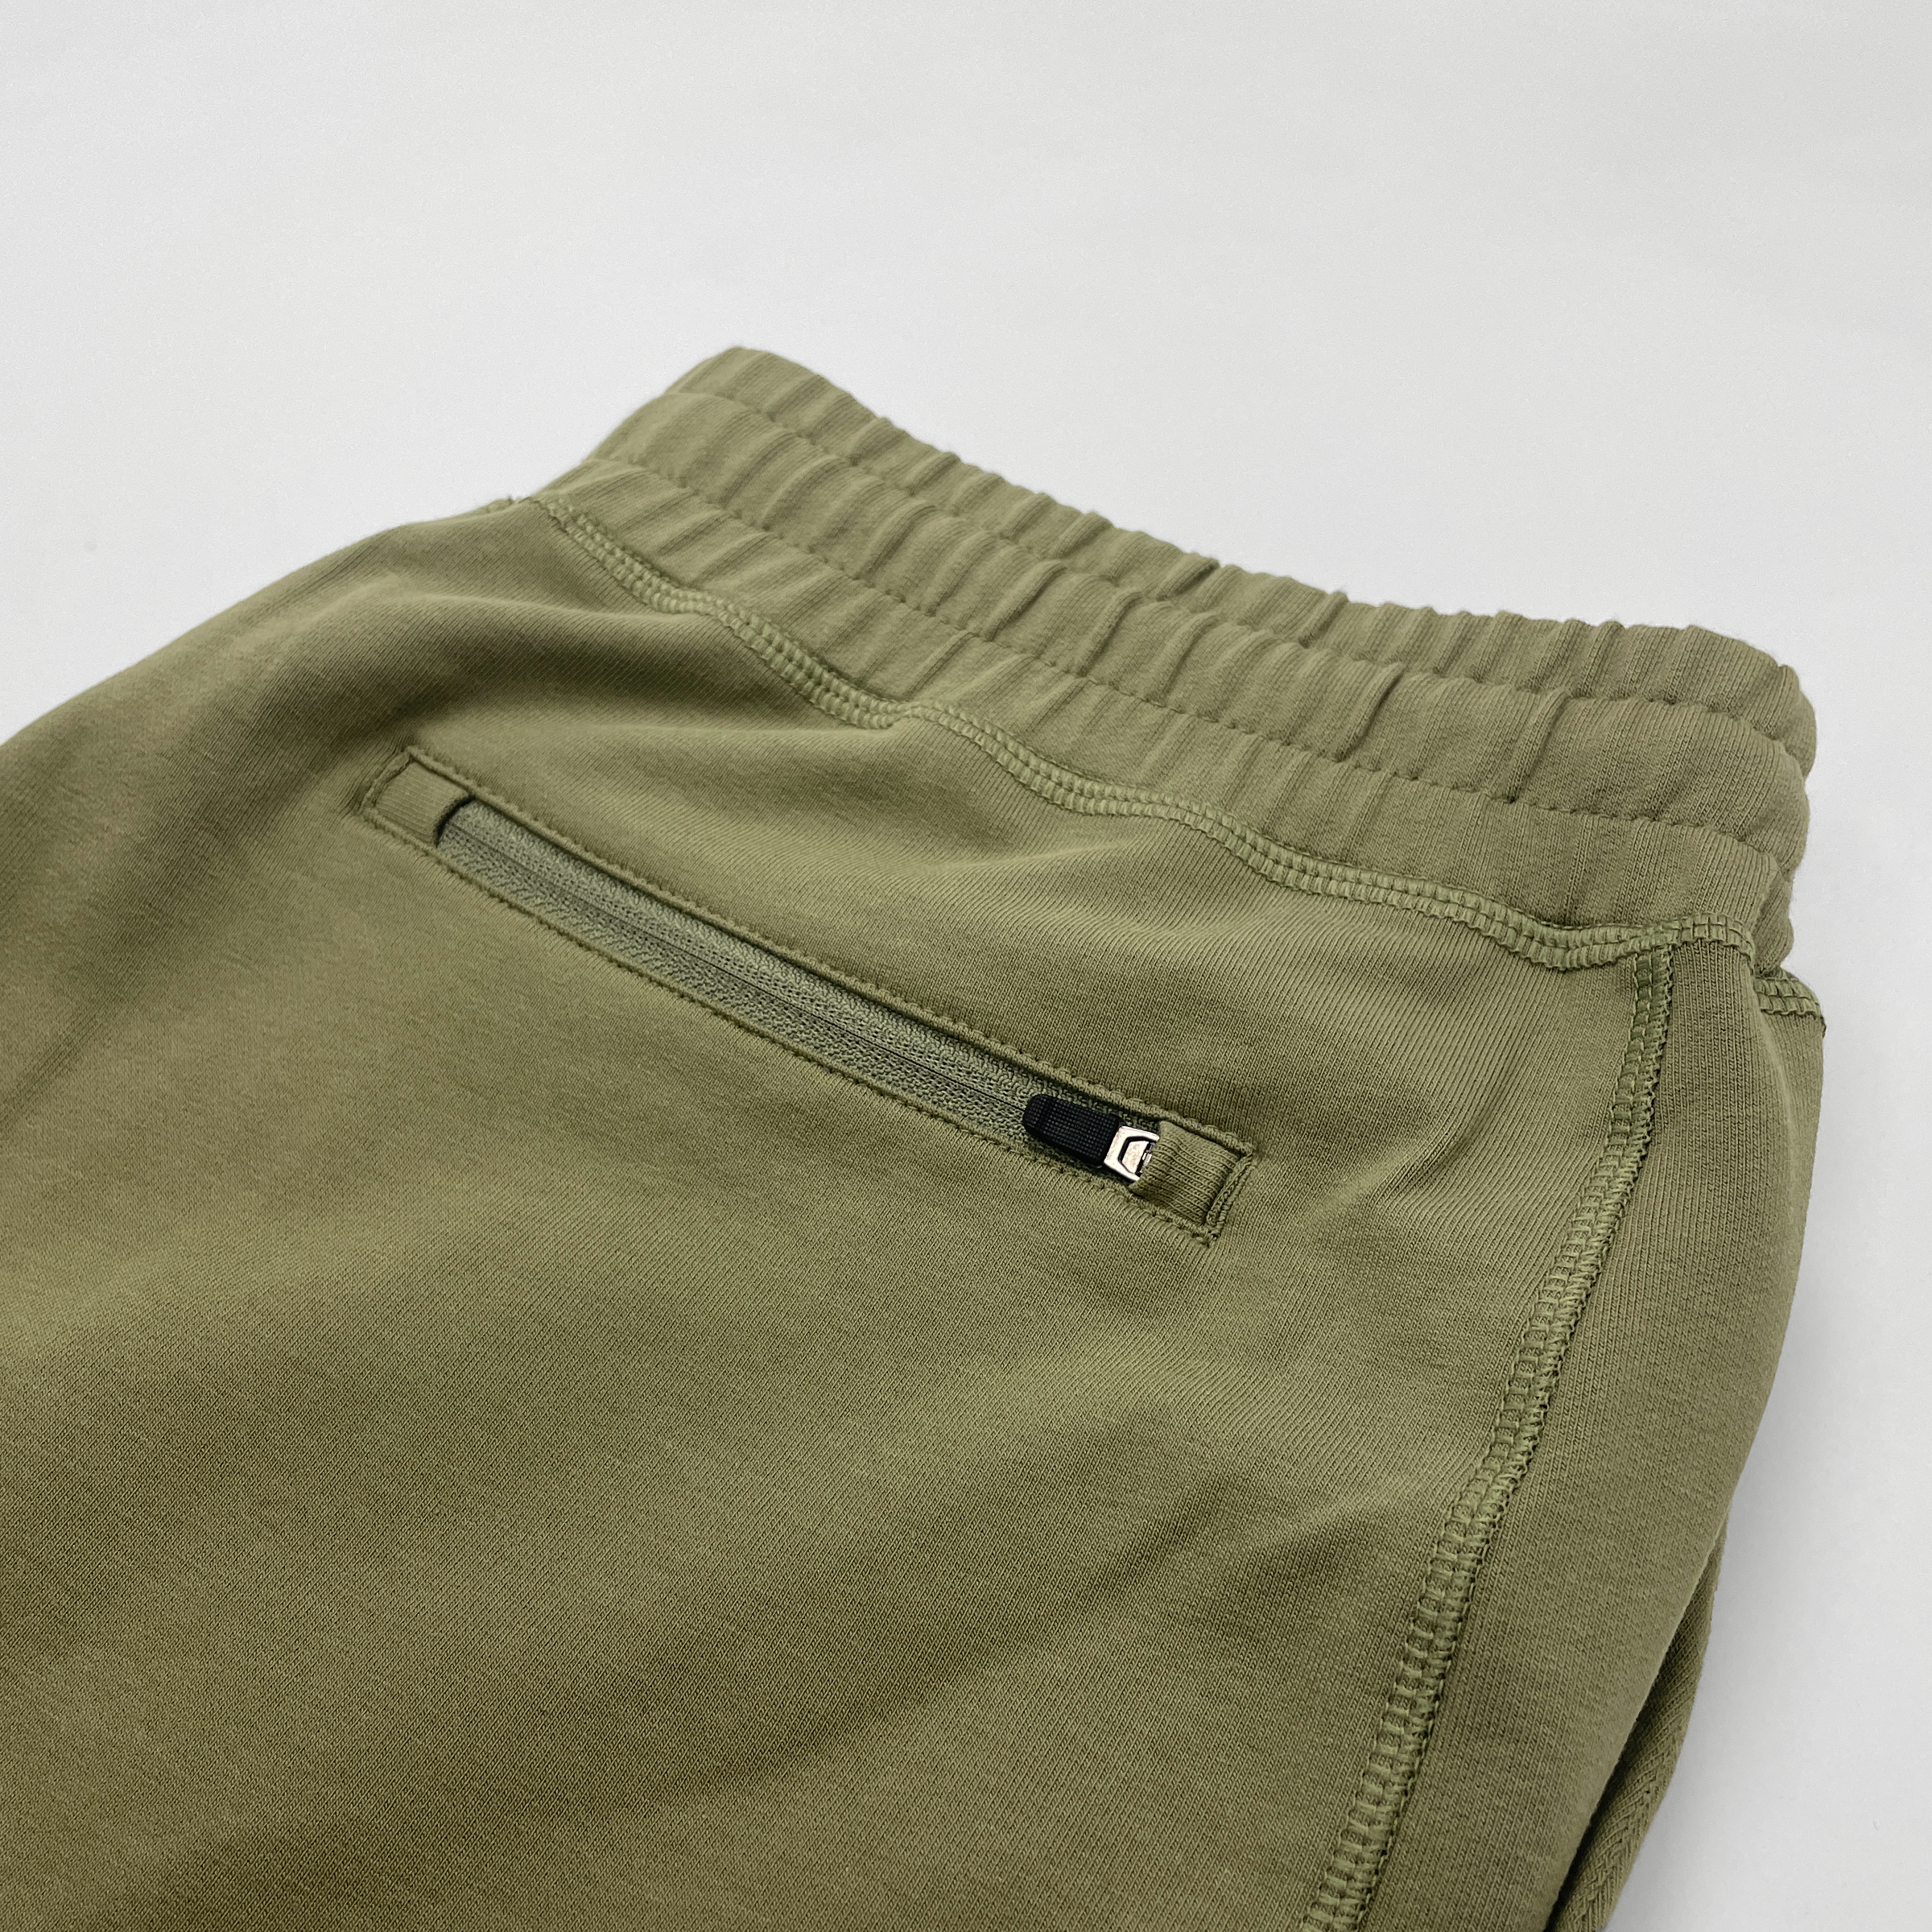 Loft Jogger Olive folded showing back right zipper pocket